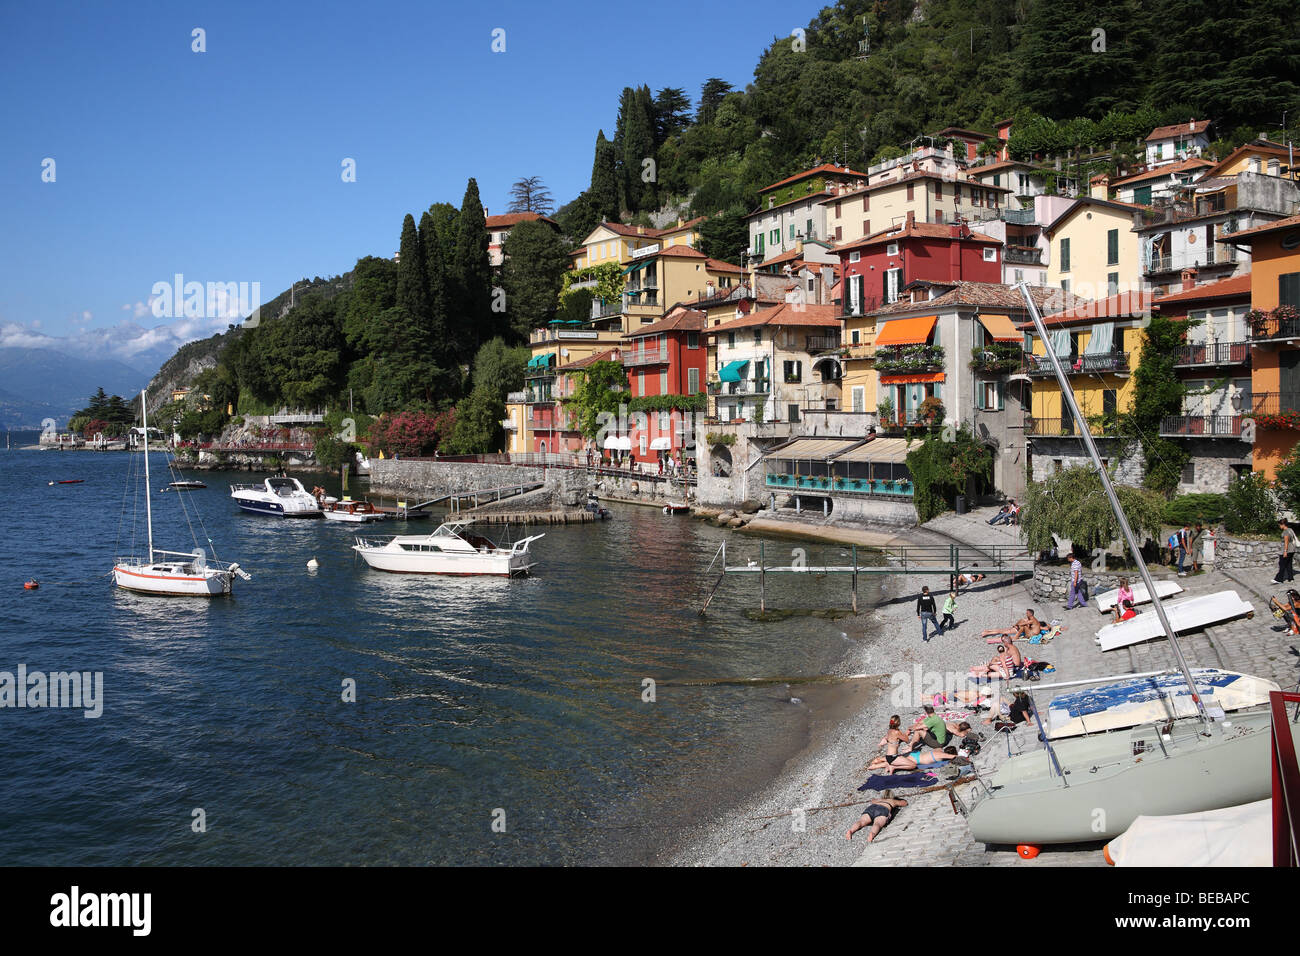 People sunbathing on the beach at Varenna on Lake Como, Italy, Europe Stock Photo